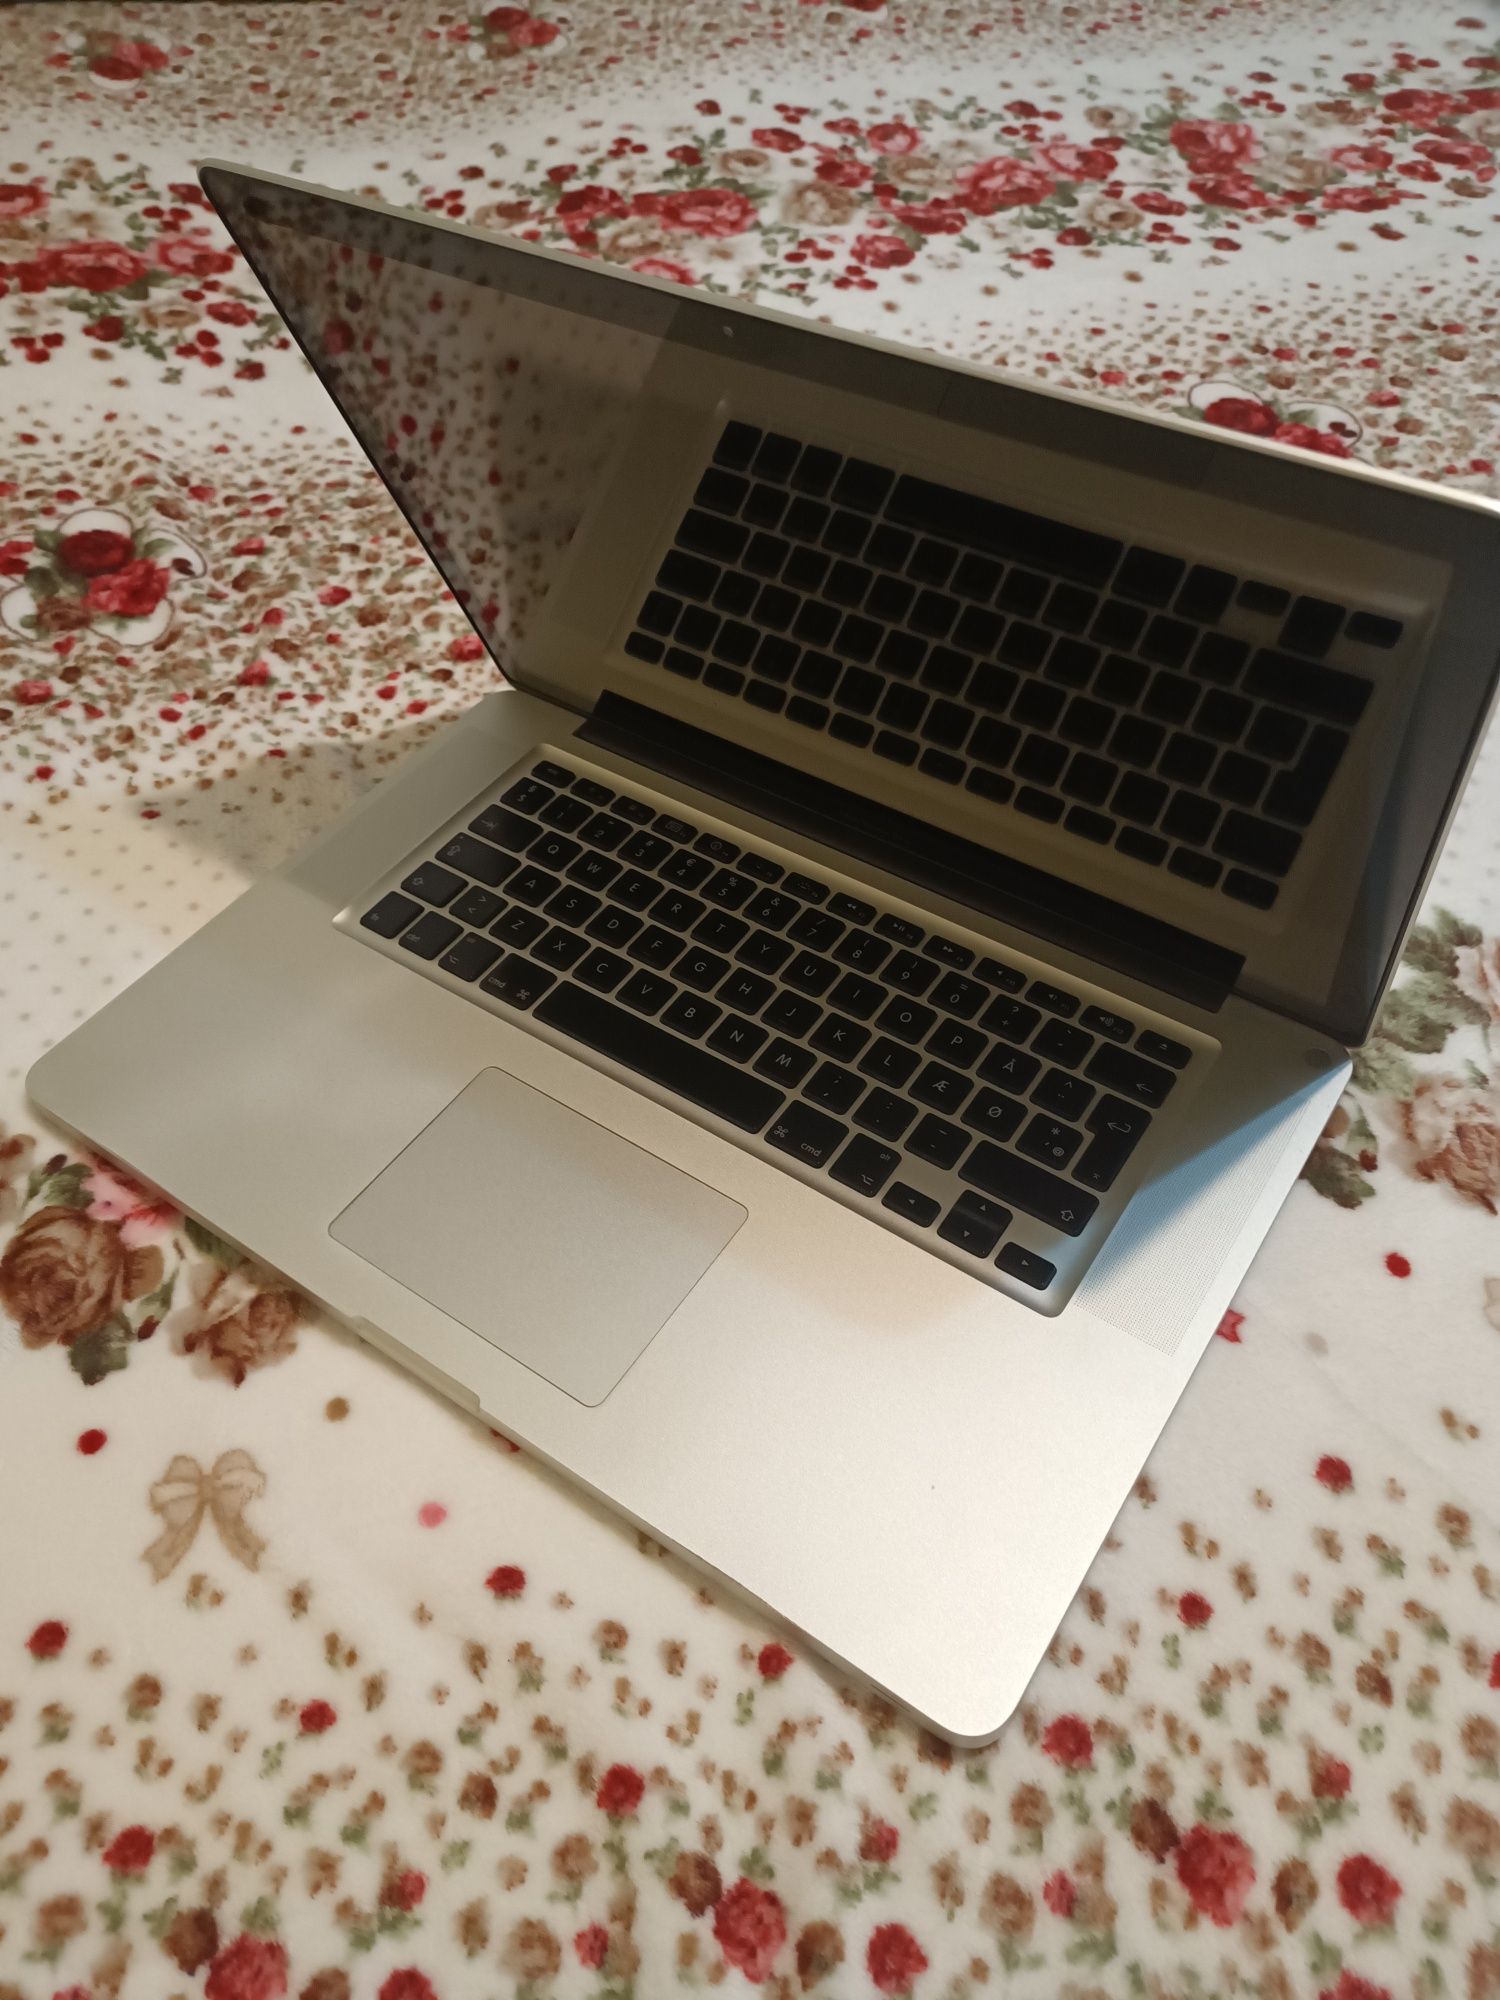 Macbook Pro 15 inch (Mid 2010)